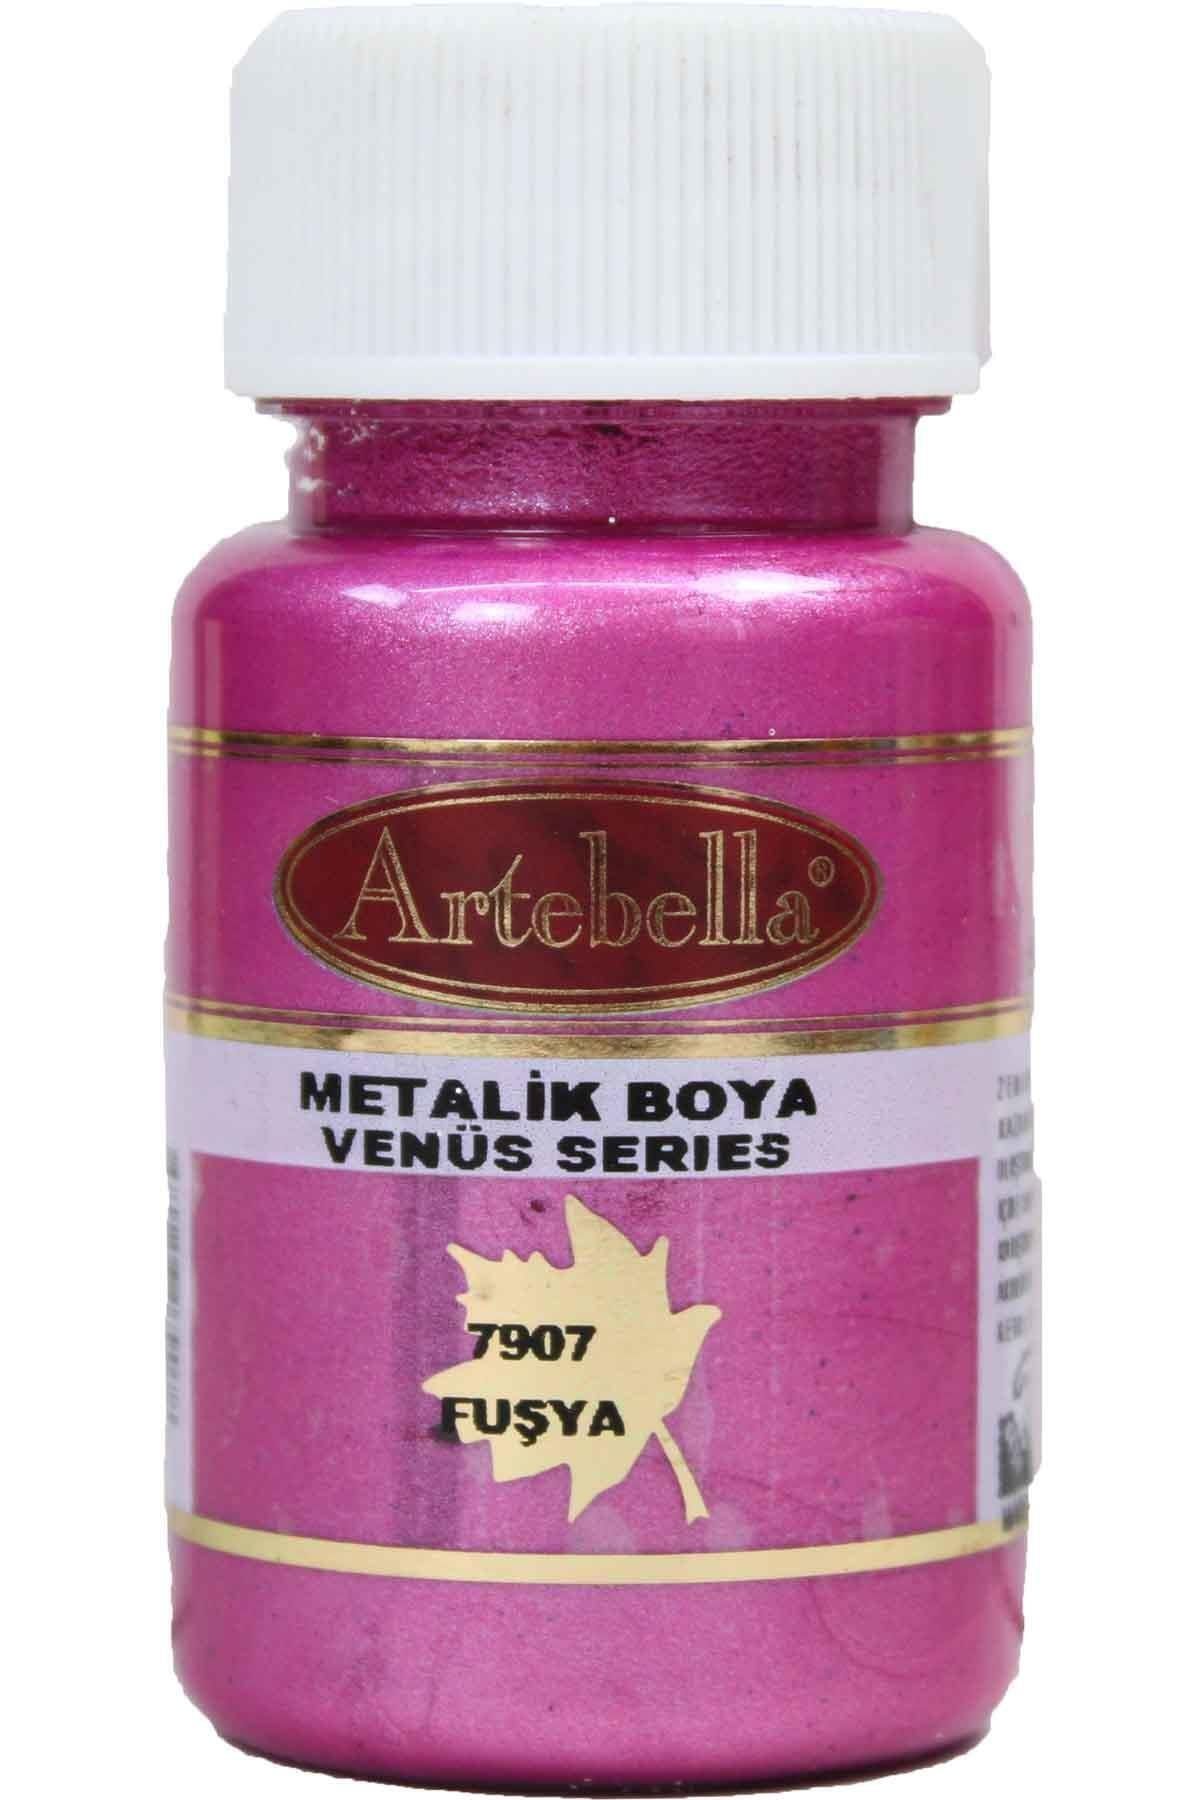 Artebella Fuşya 7907 Metalik Boya Venüs Serisi 50 ml